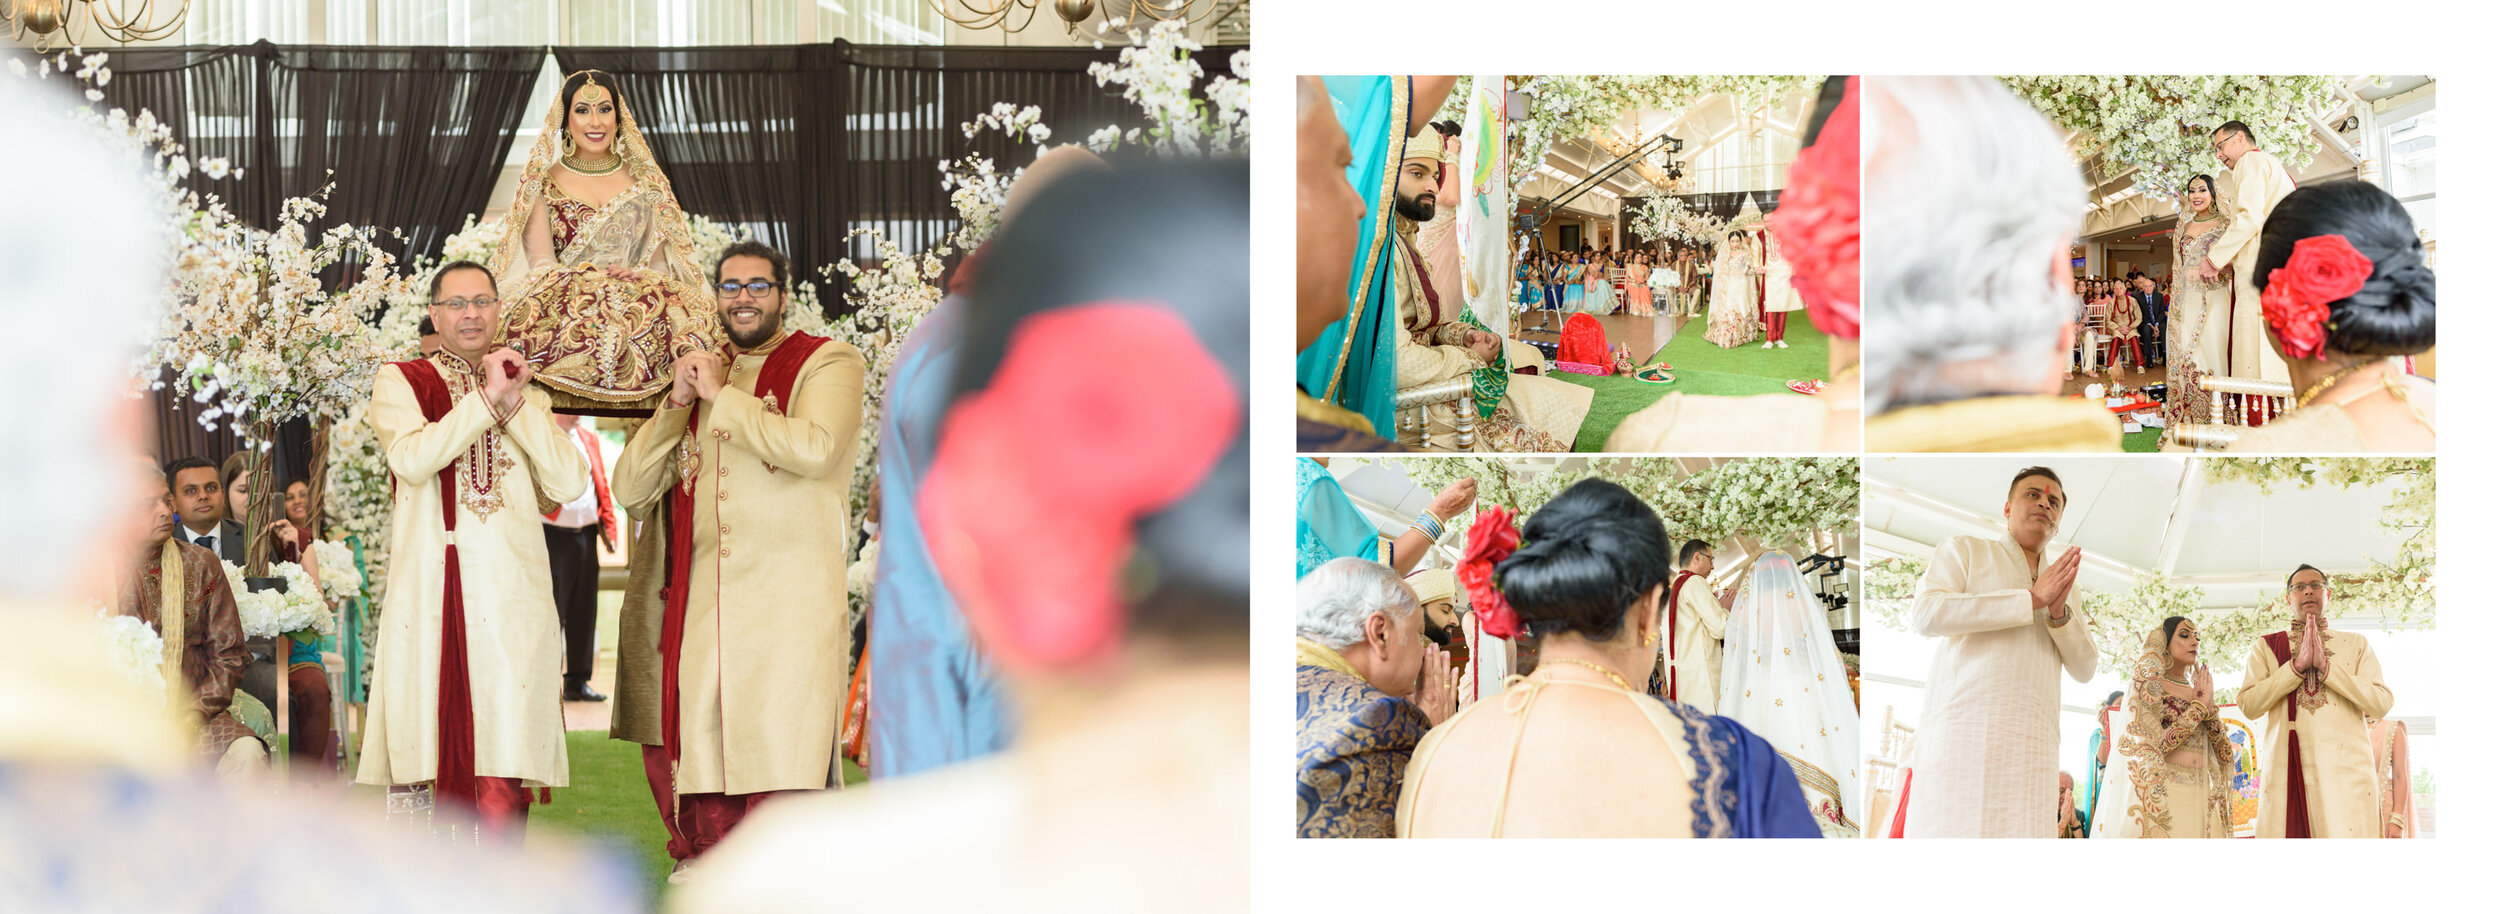 satnam photography luxury hindu wedding album -24.jpg